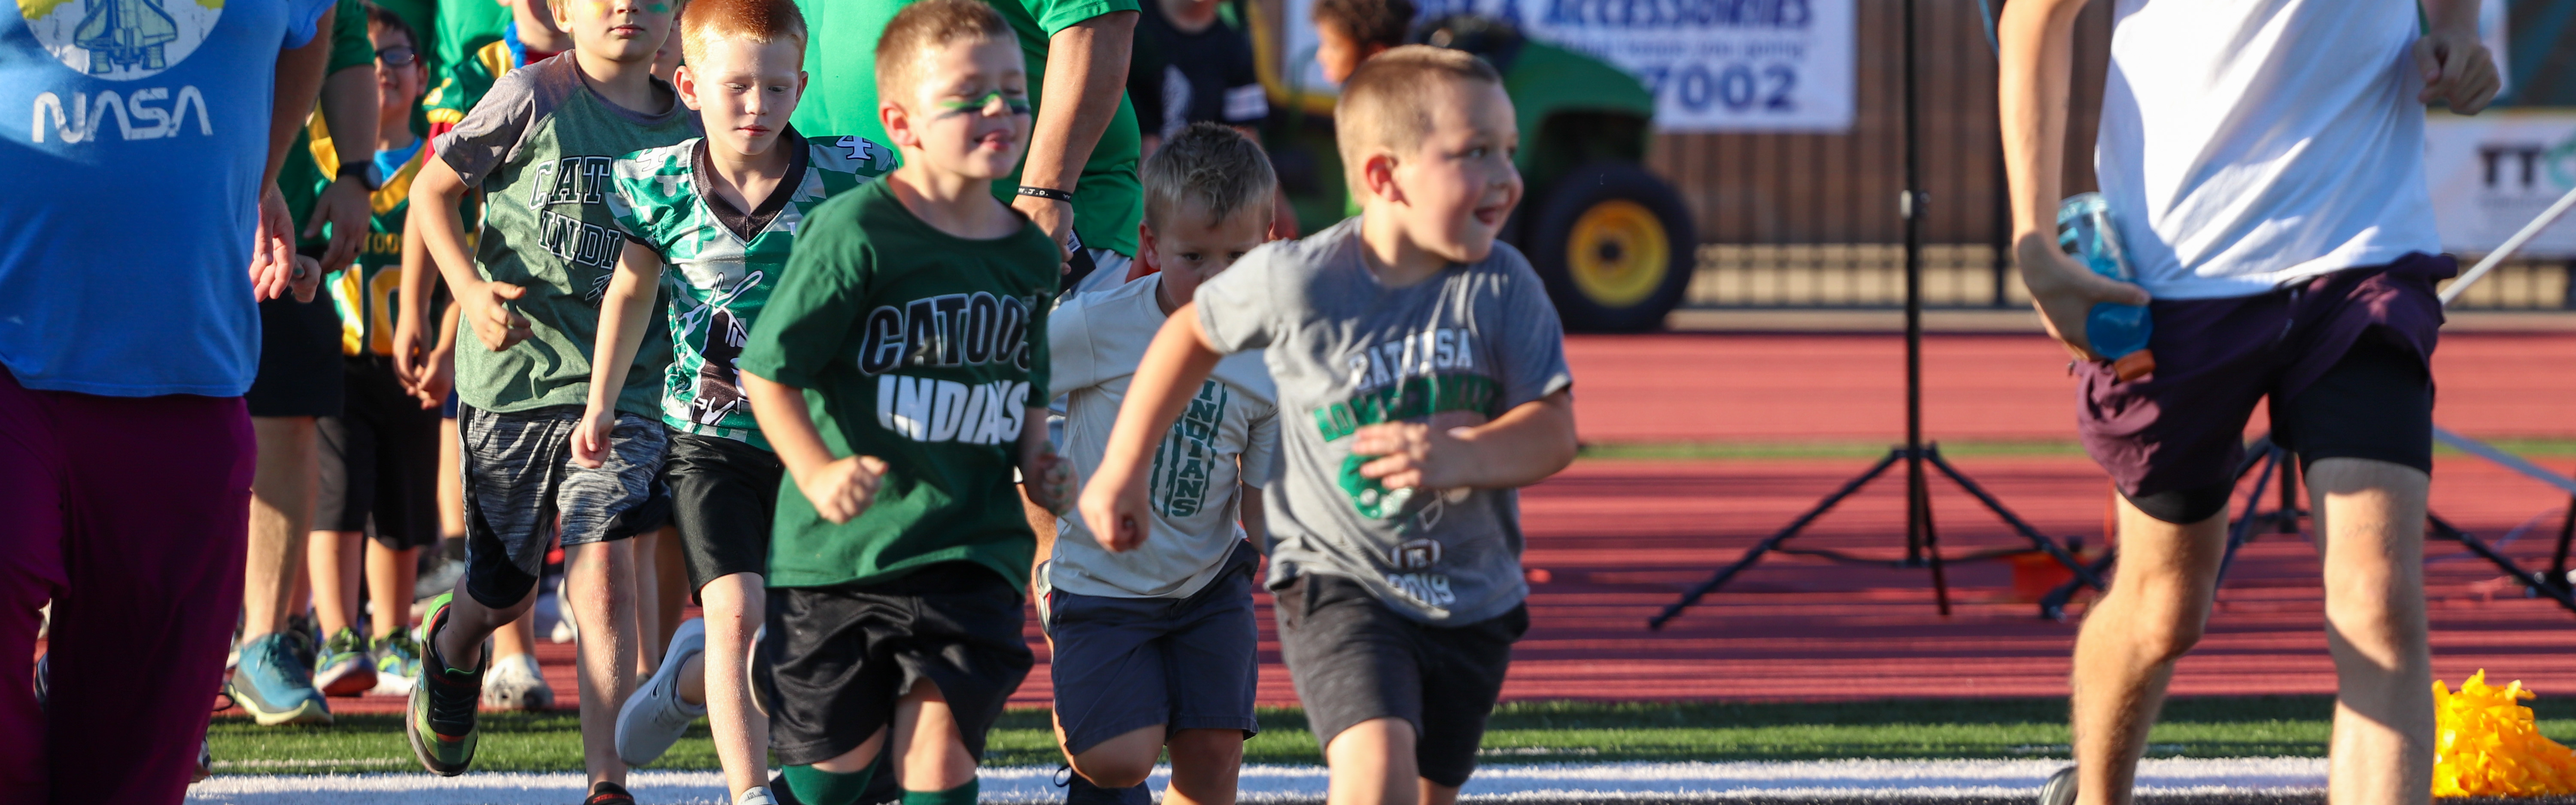 Elementary students running onto field